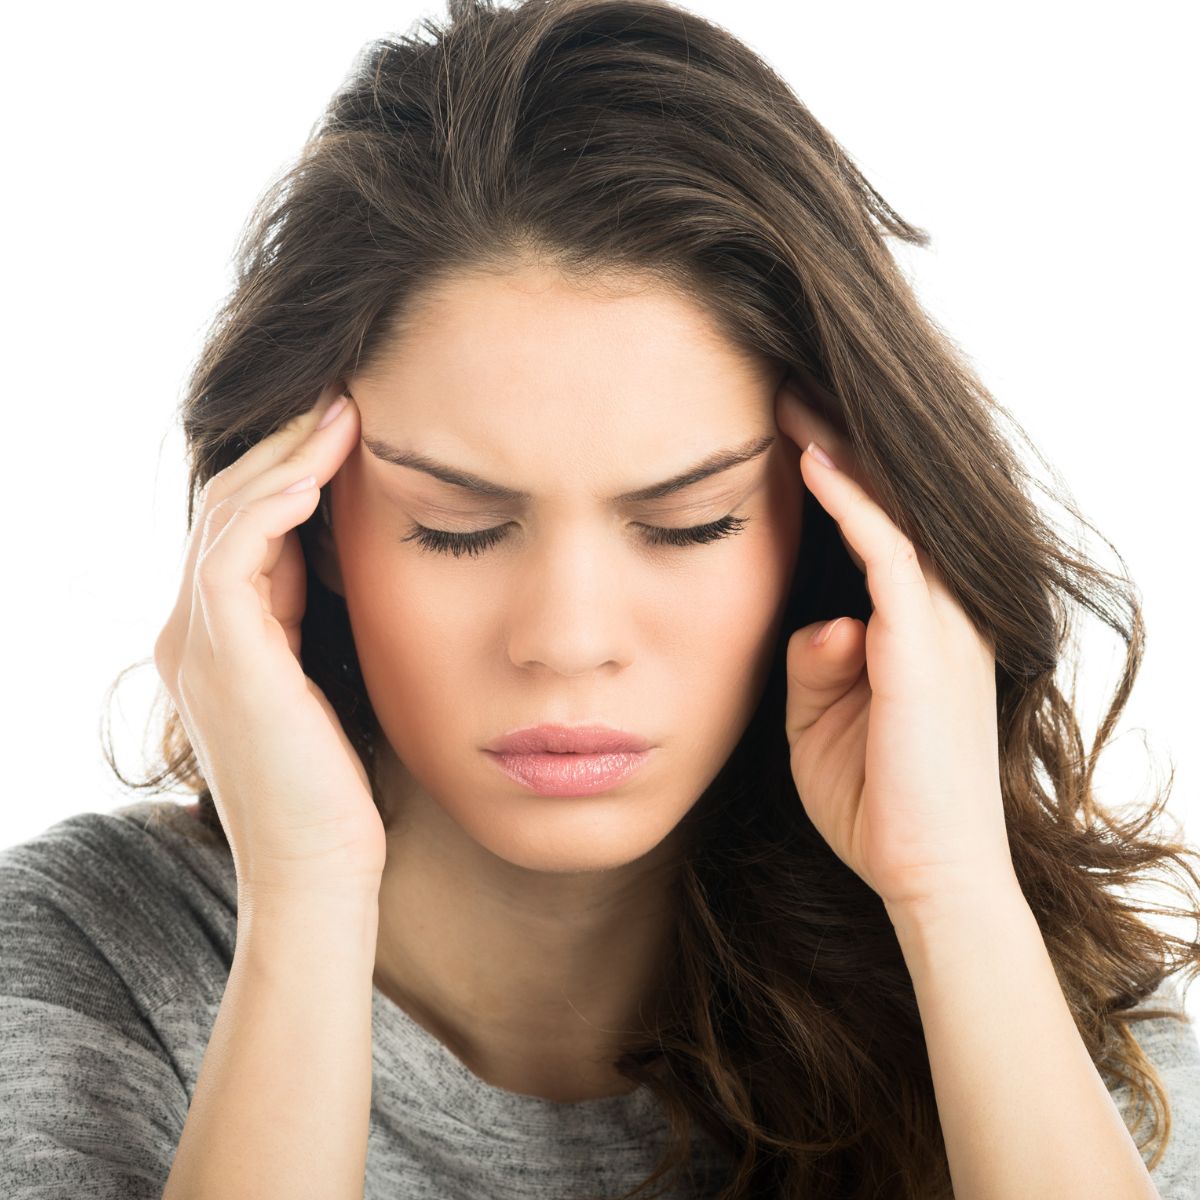 How HelloFresh Helps with My Migraines